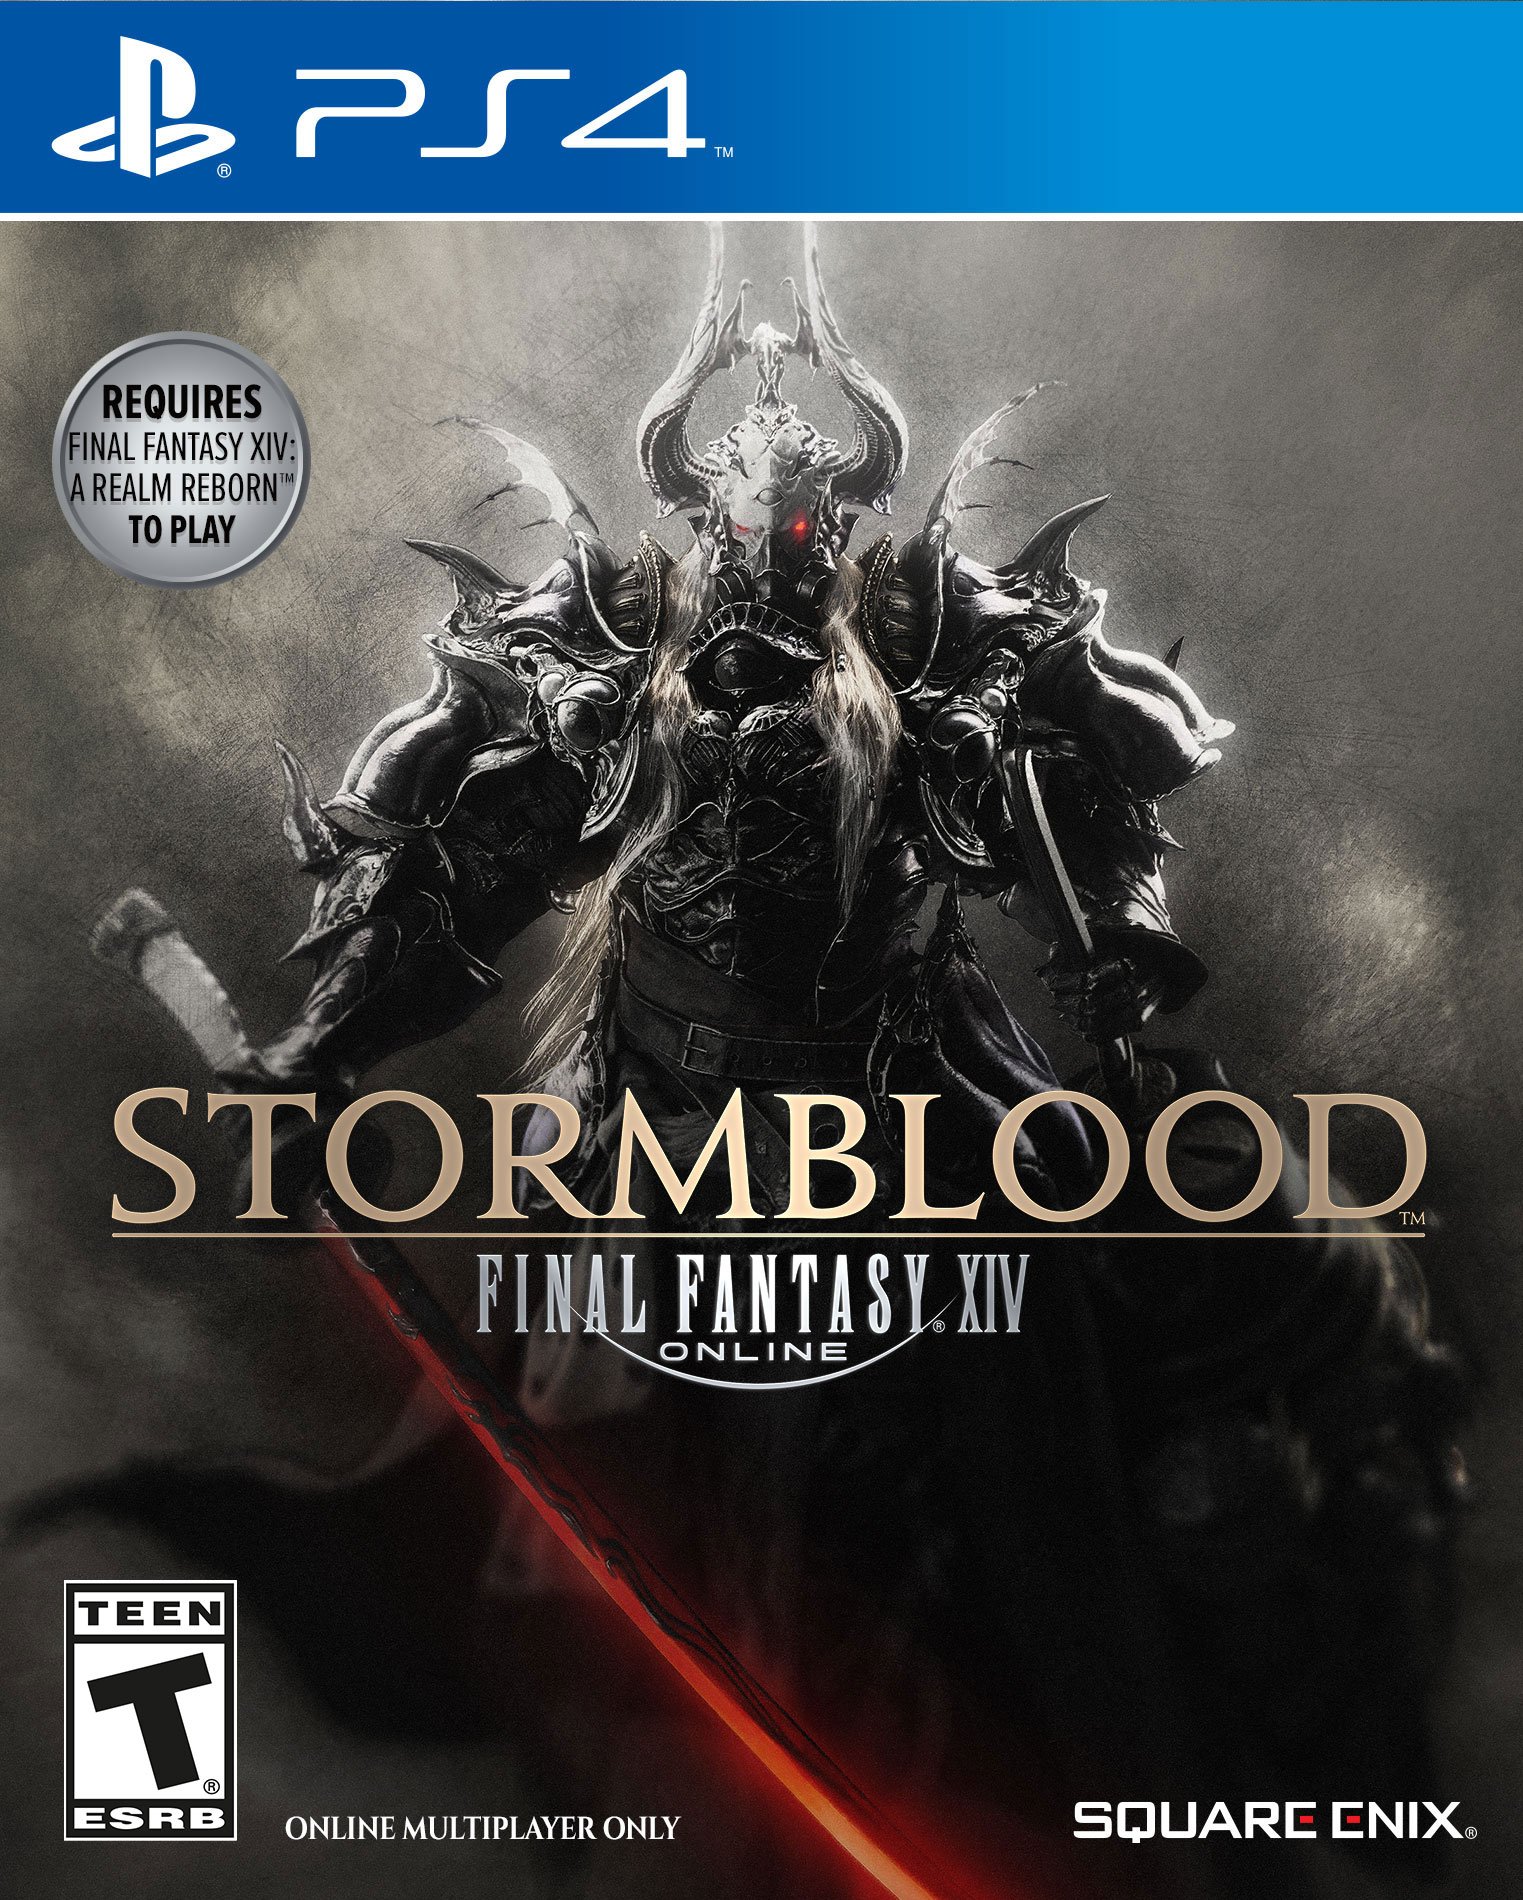 Final Fantasy XIV: Stormblood Release Date (PC, PS4)